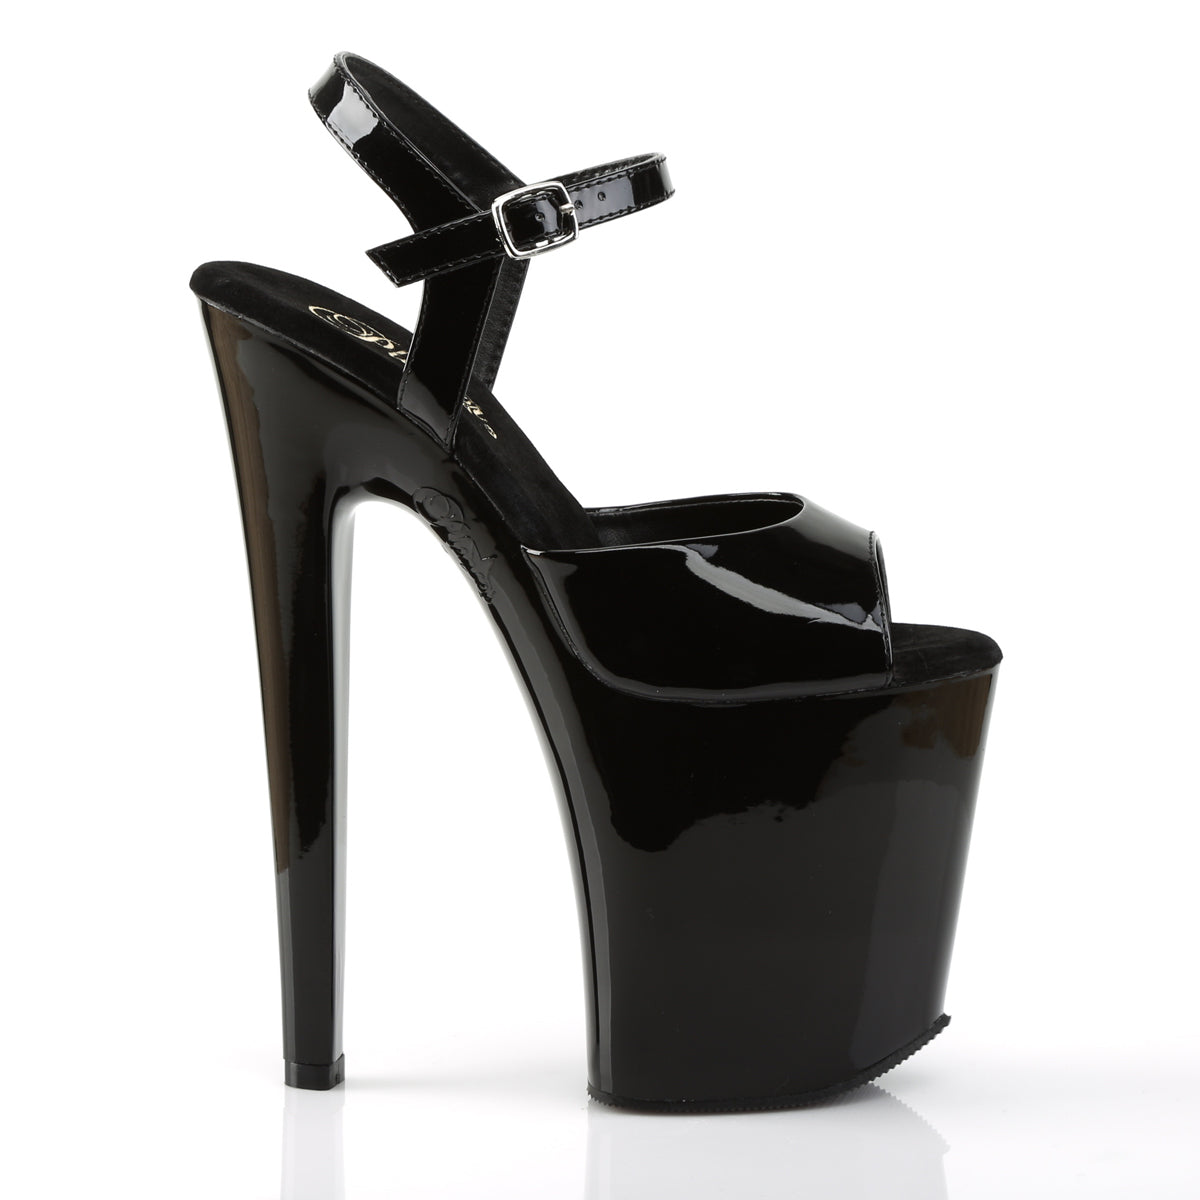 XTREME-809 8" Heel Black Patent Pole Dancing Platforms Shoes-Pleaser- Sexy Shoes Fetish Heels